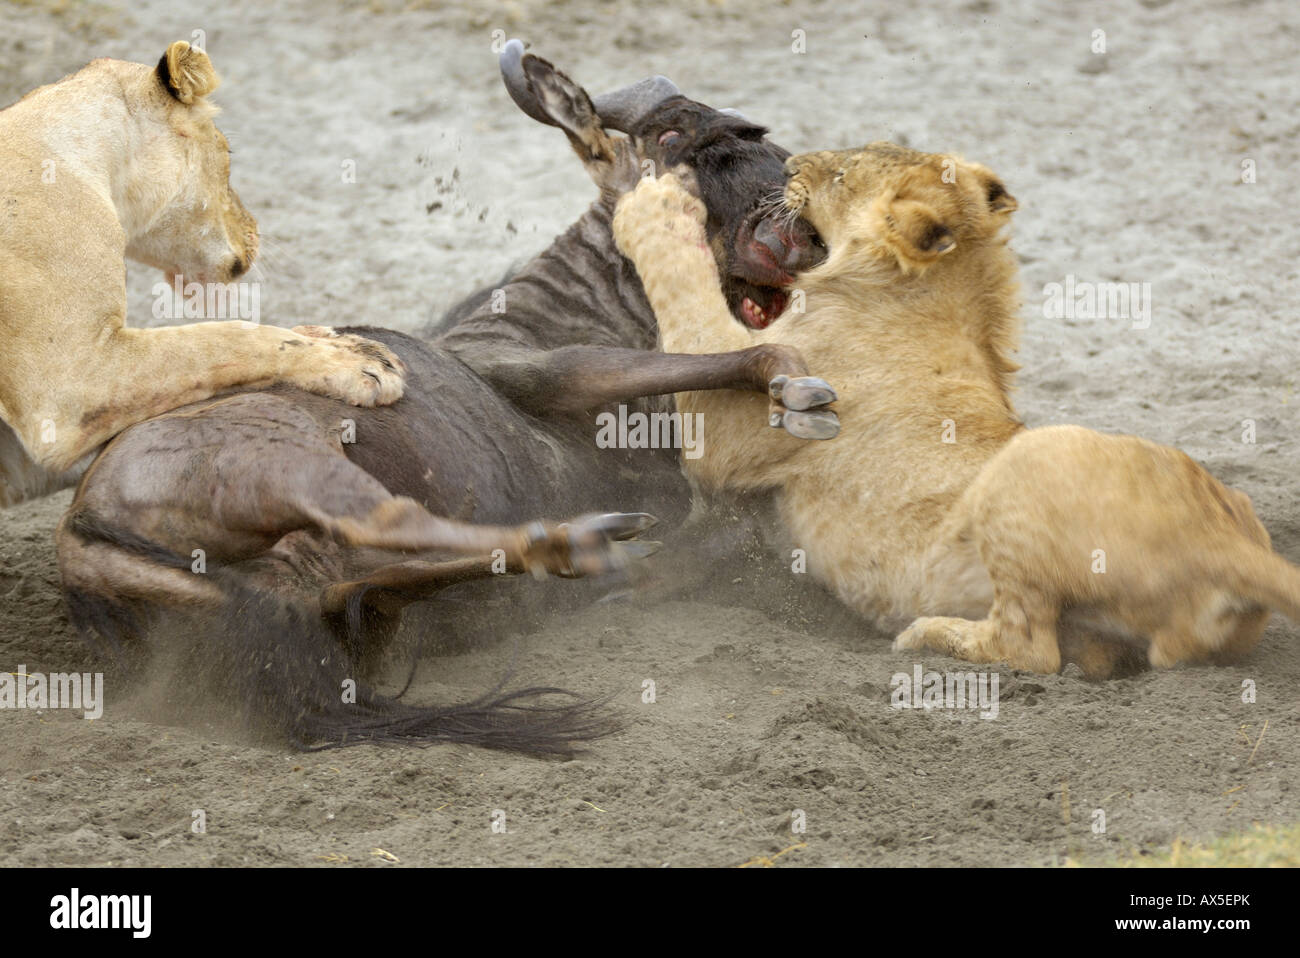 Lion (Panthera leo) morning hunt, a young lion fighting a gnu, Ngorongoro Crater, Tanzania Stock Photo